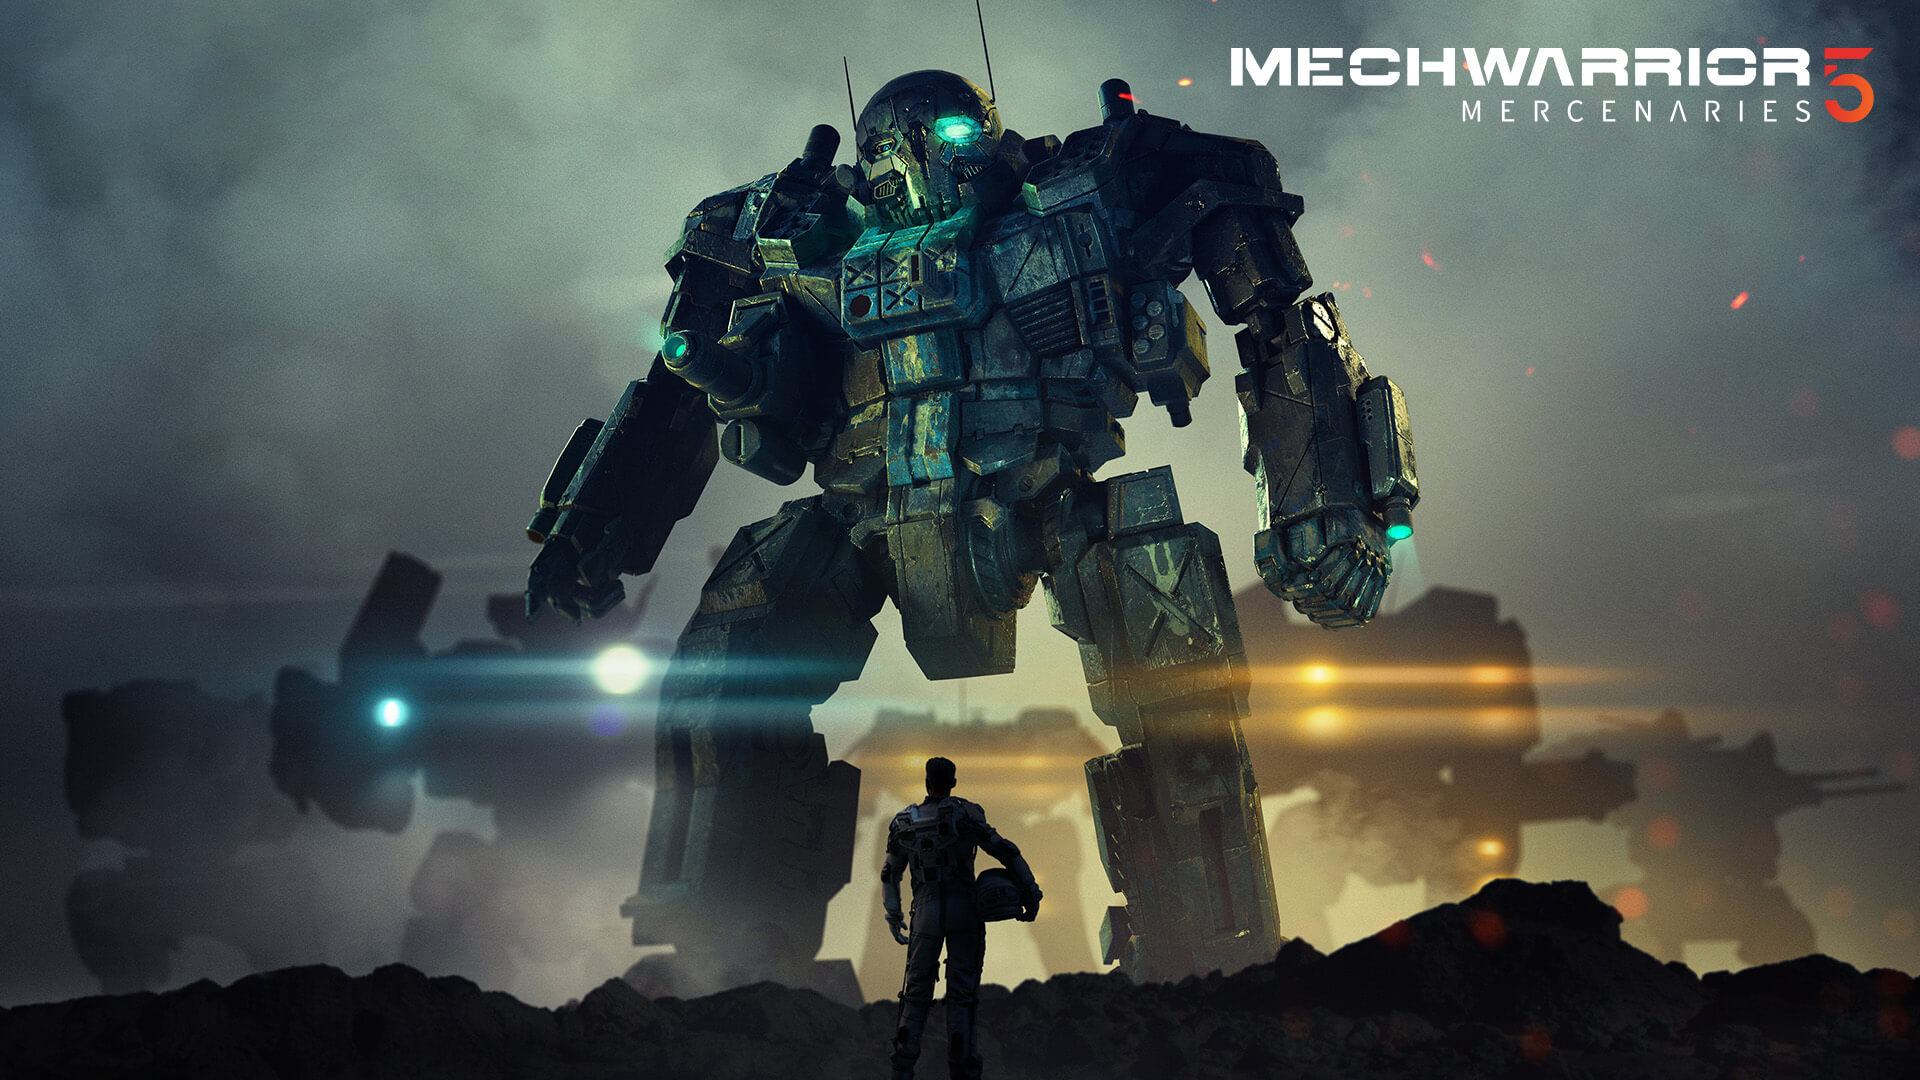 MechWarrior 5 Mercenaries free full pc game for Download